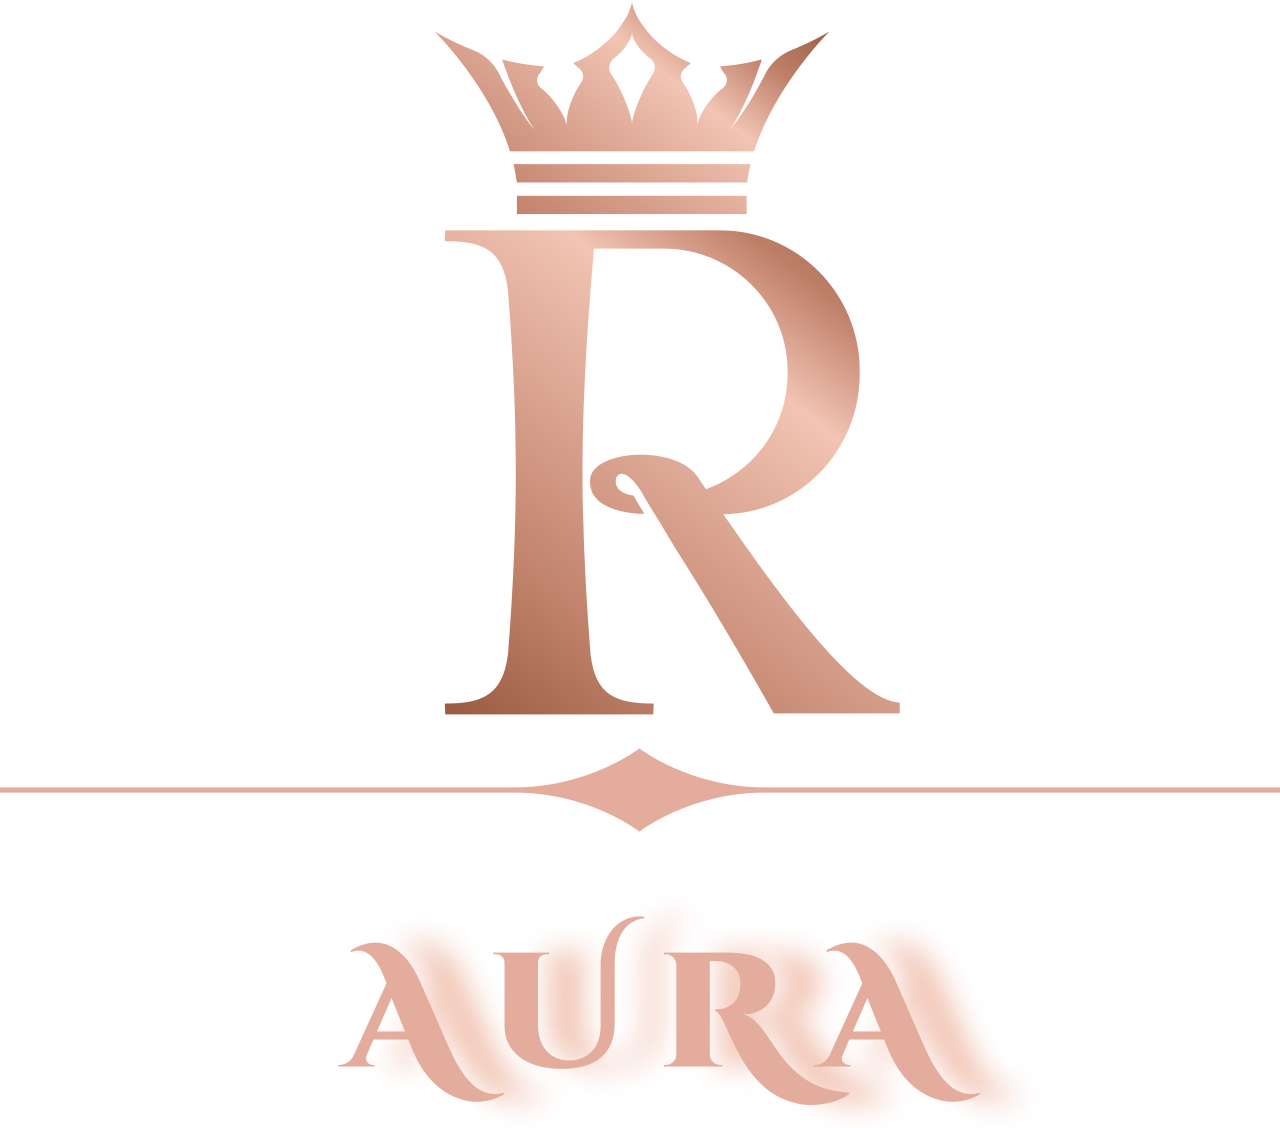 Aura's logo